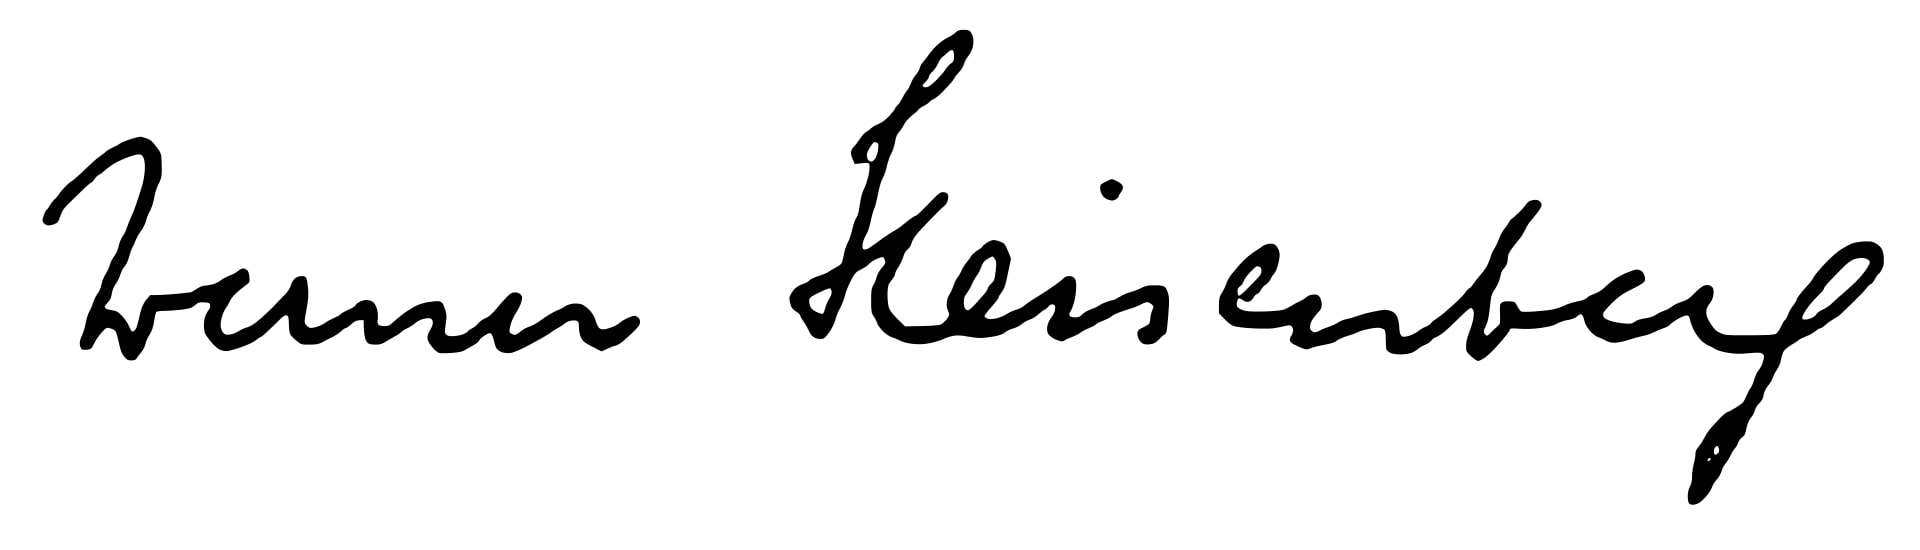 Werner Heisenberg Signature